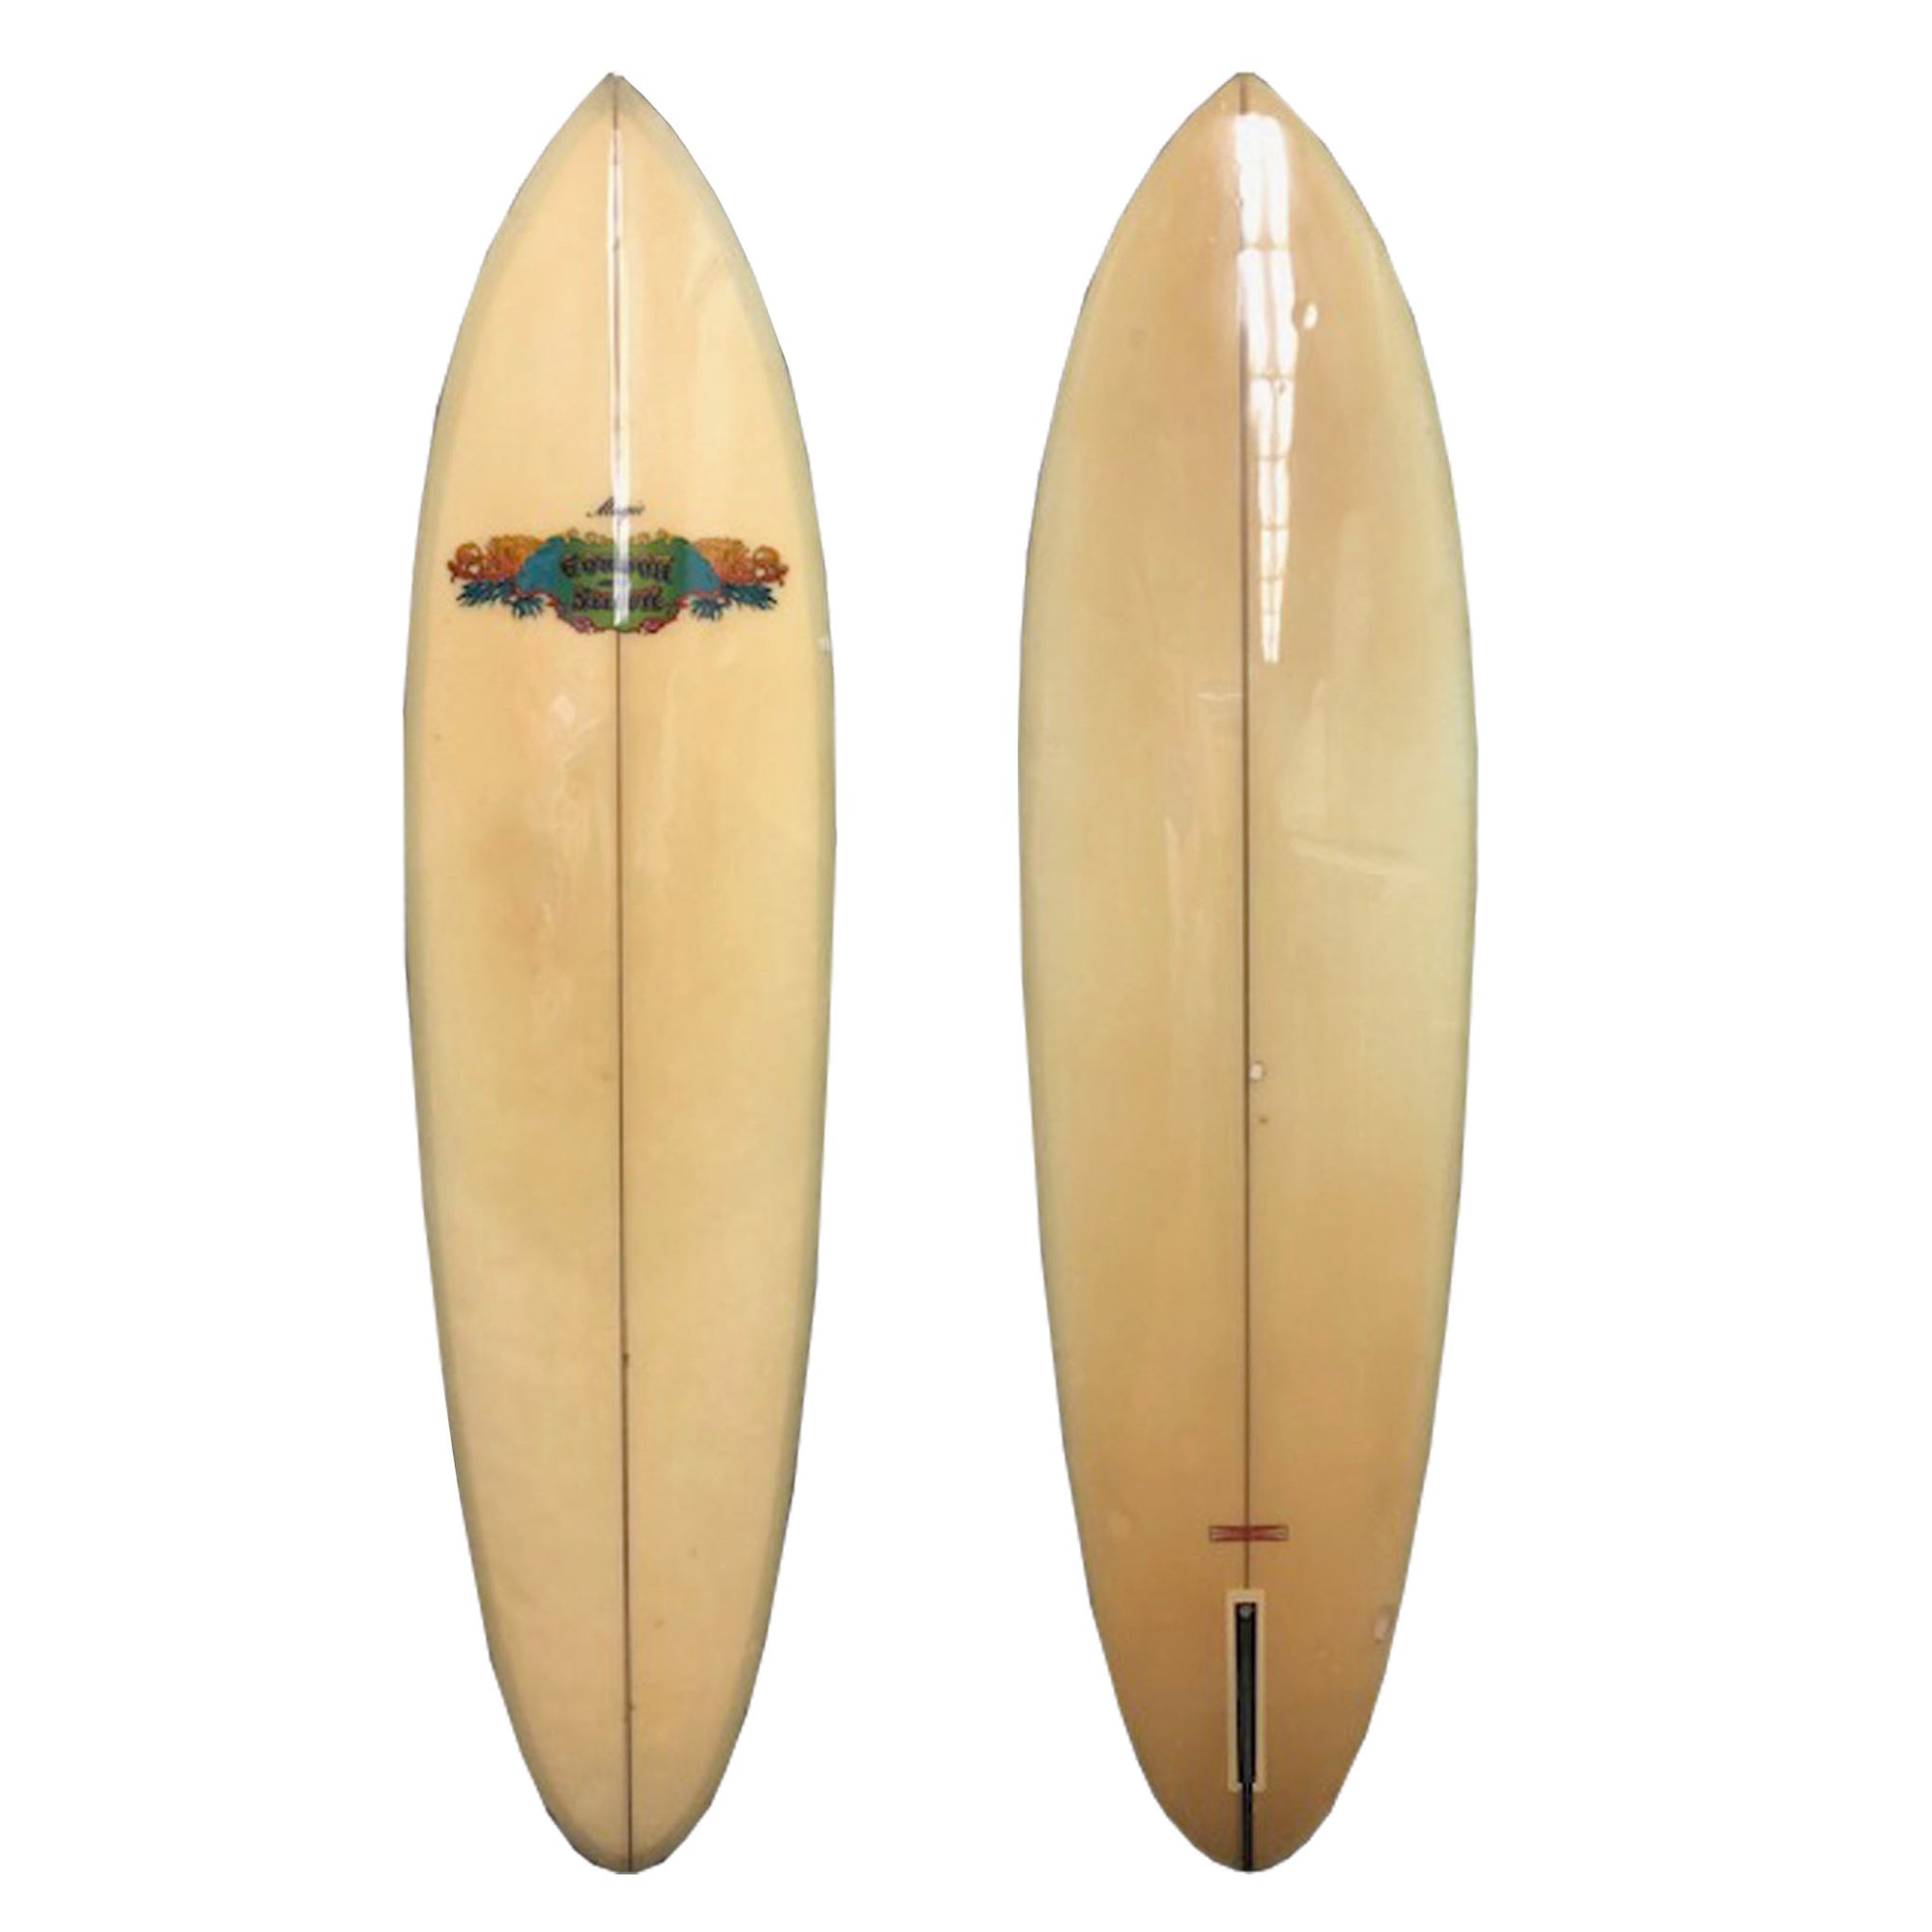 Gordon and Smith Magic Model 7'8 Collector Surfboard